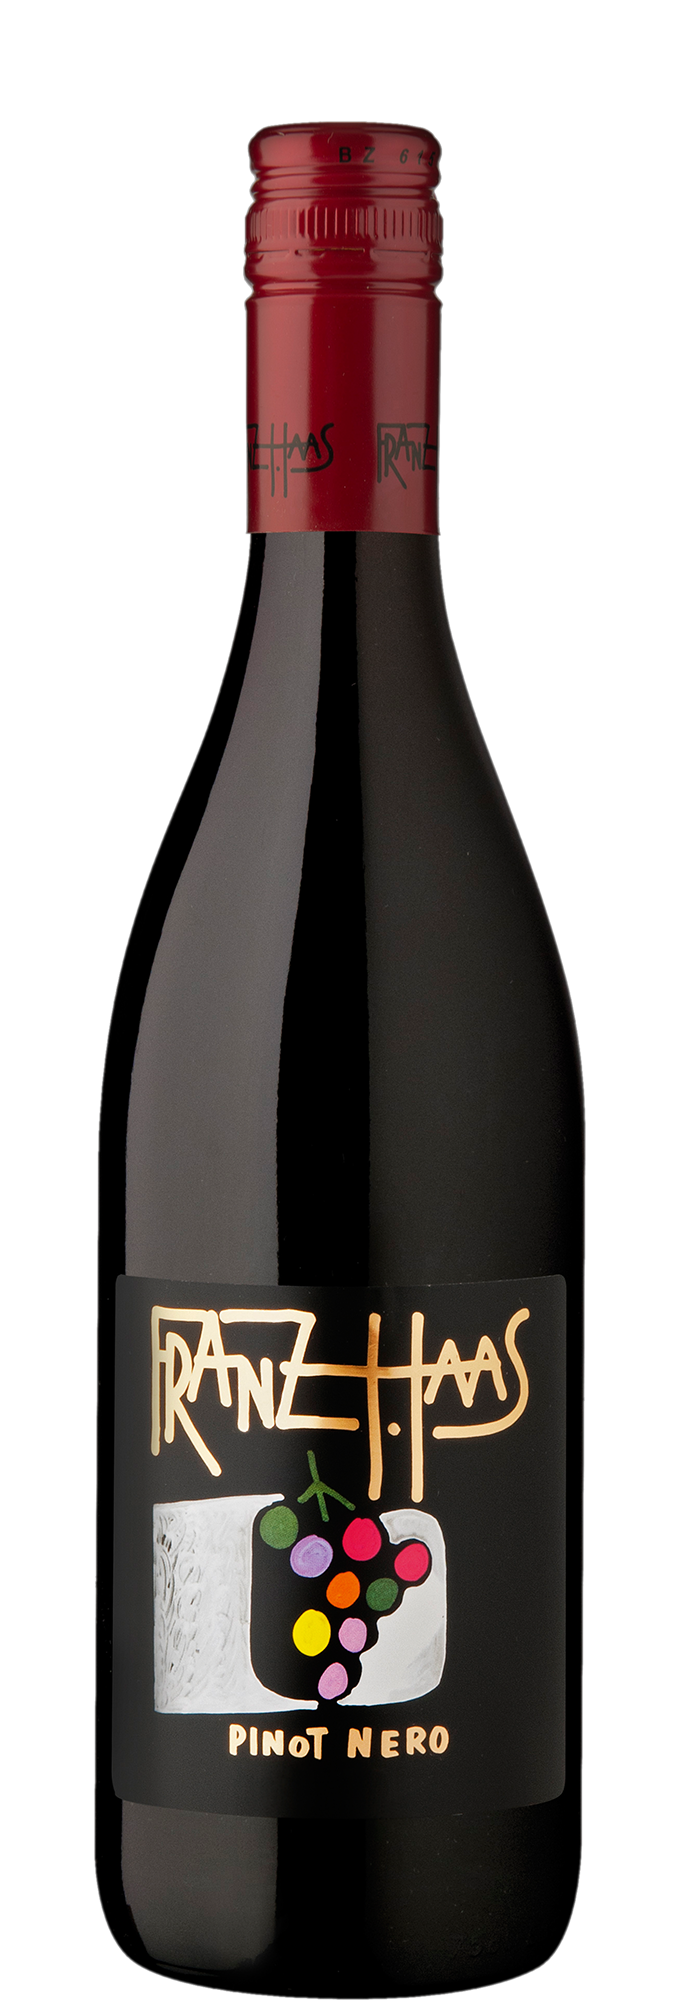 Pinot Nero Alto Adige DOC 2020 - Franz Haas